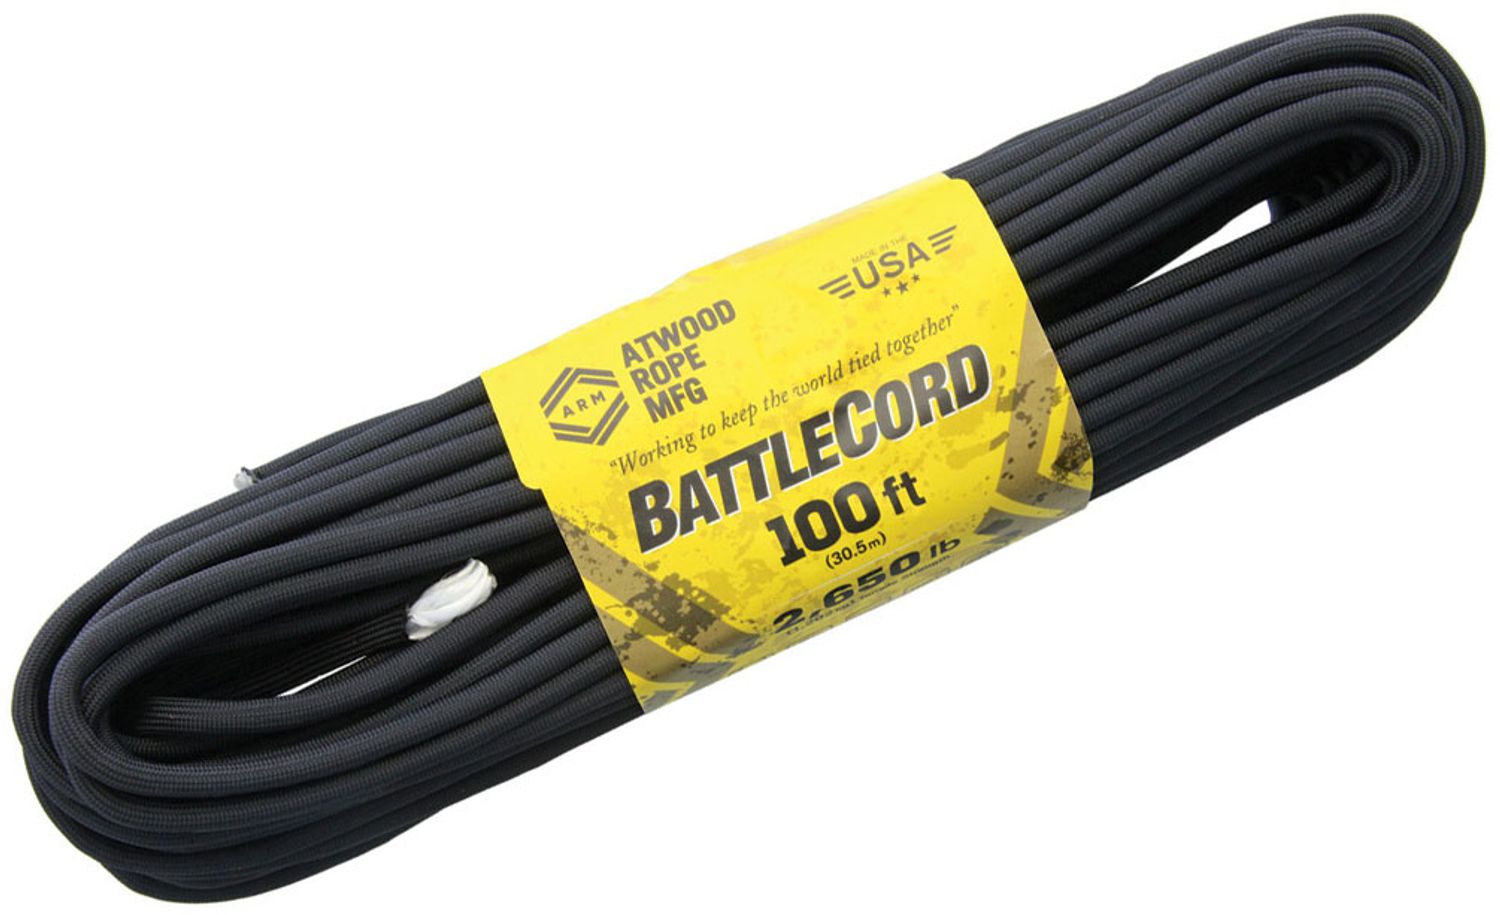 Atwood Rope BattleCord, Black, 100 Feet - KnifeCenter - RG1123H